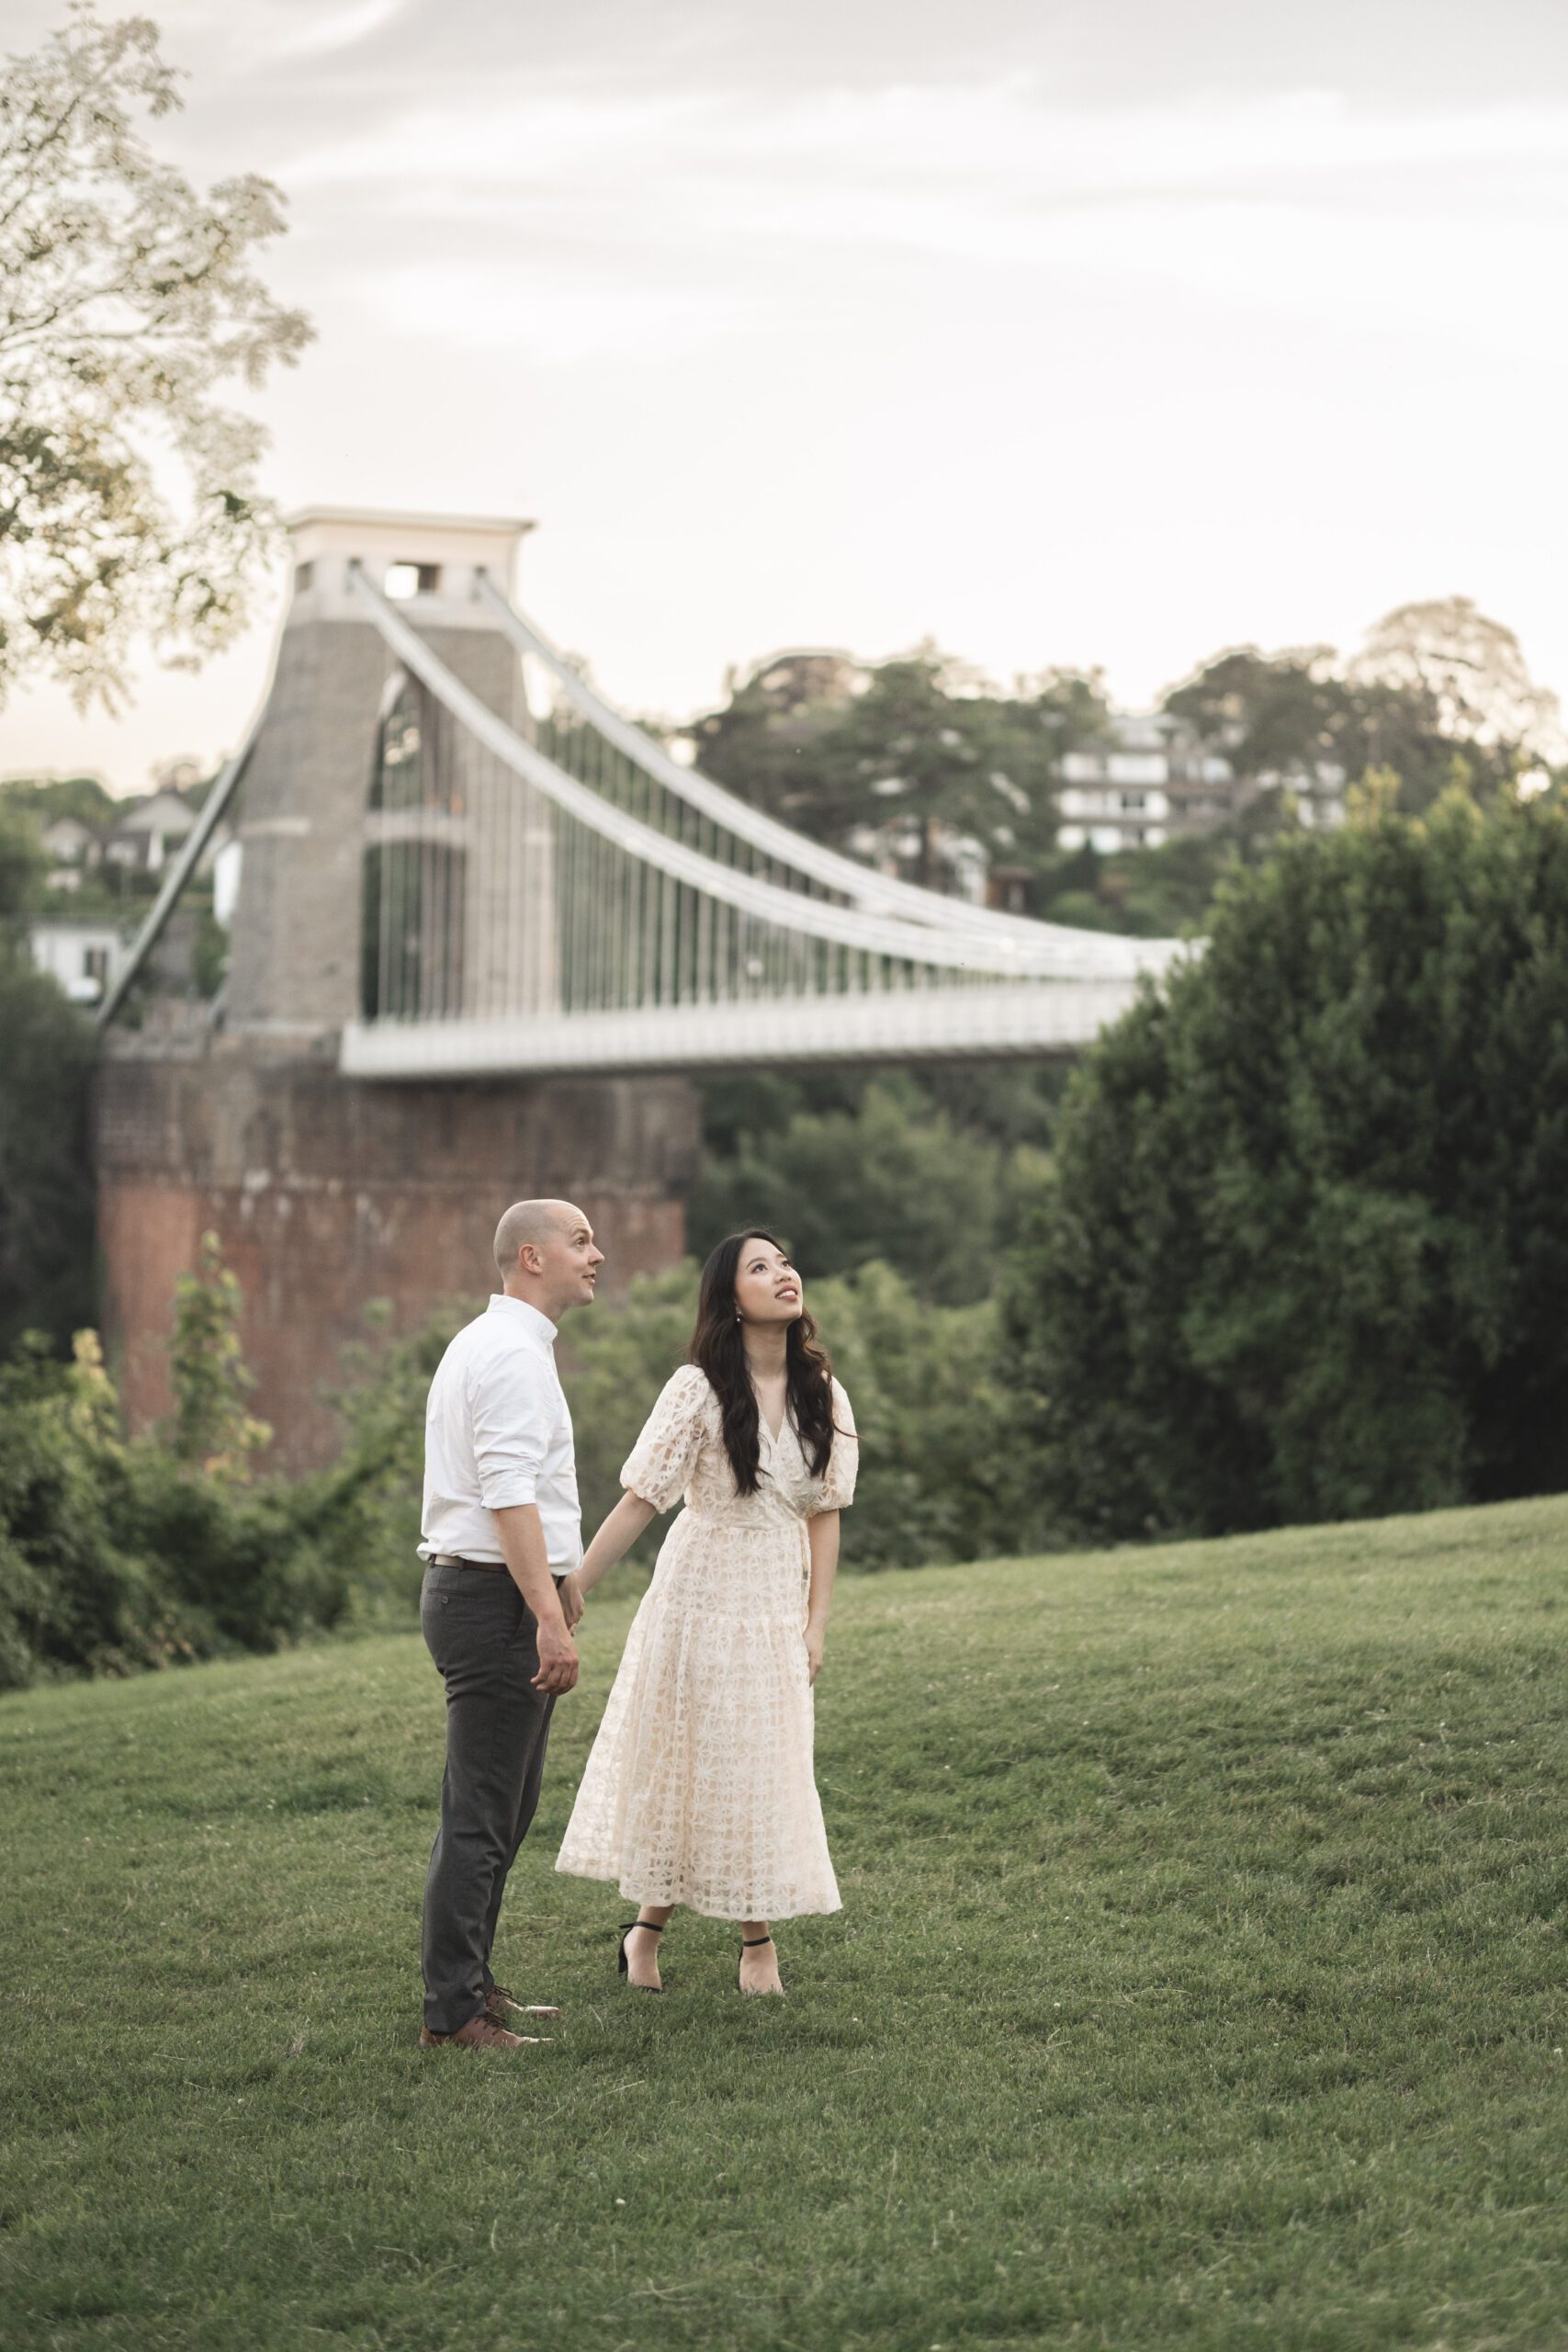 Bristol engagement shoot at iconic Clifton Suspension Bridge